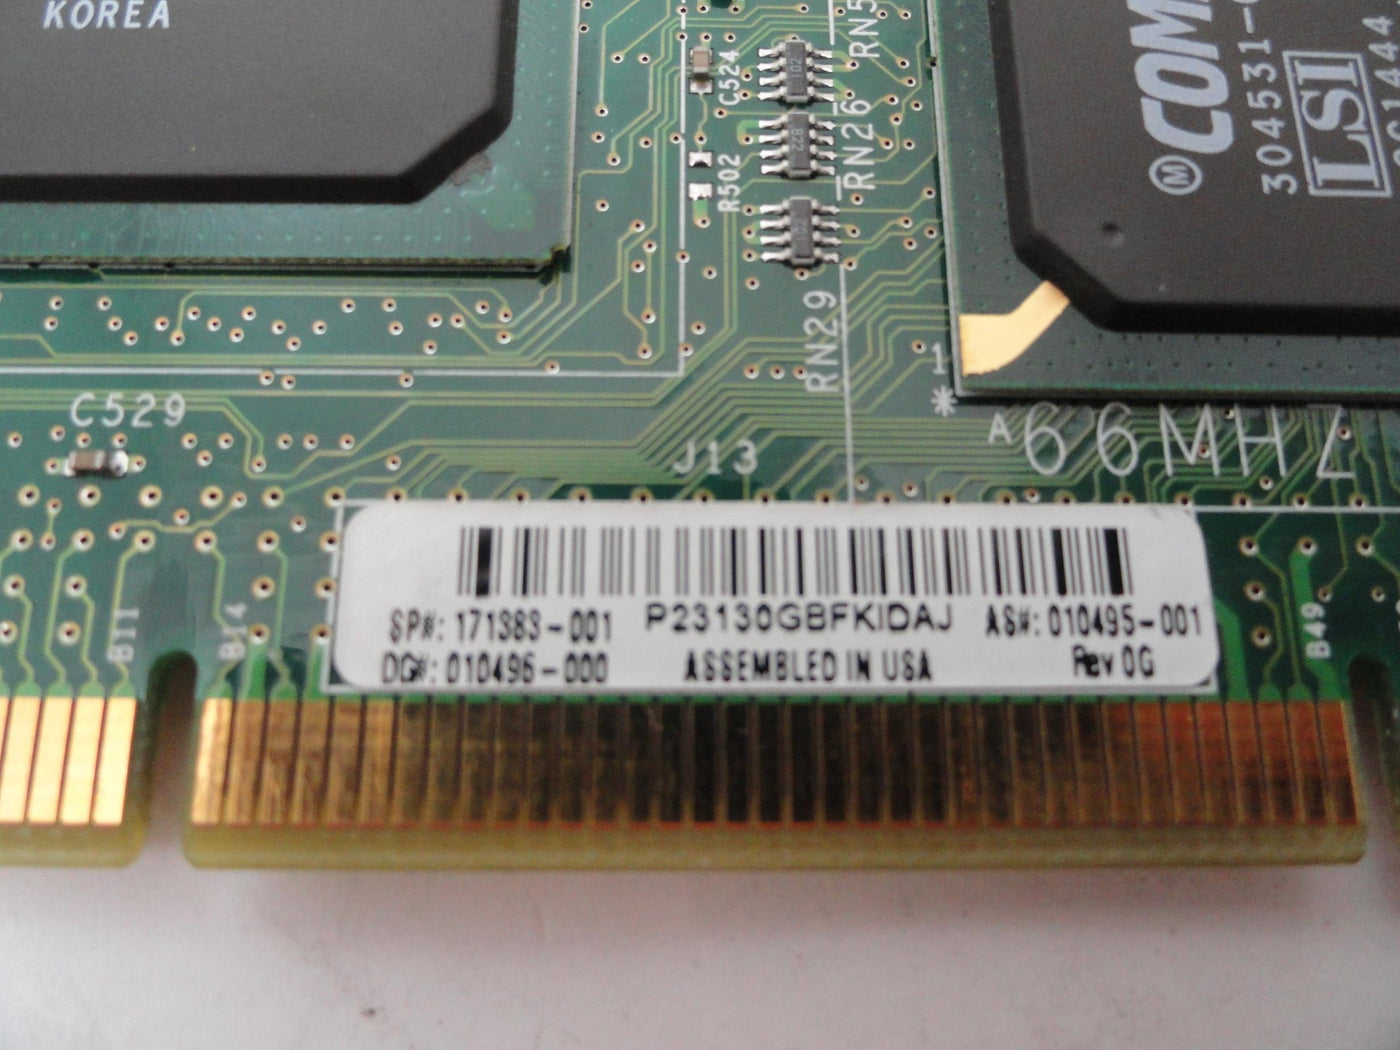 171383-001 - HP 5300 Smart Array PCI SCSI Controller - Refurbished